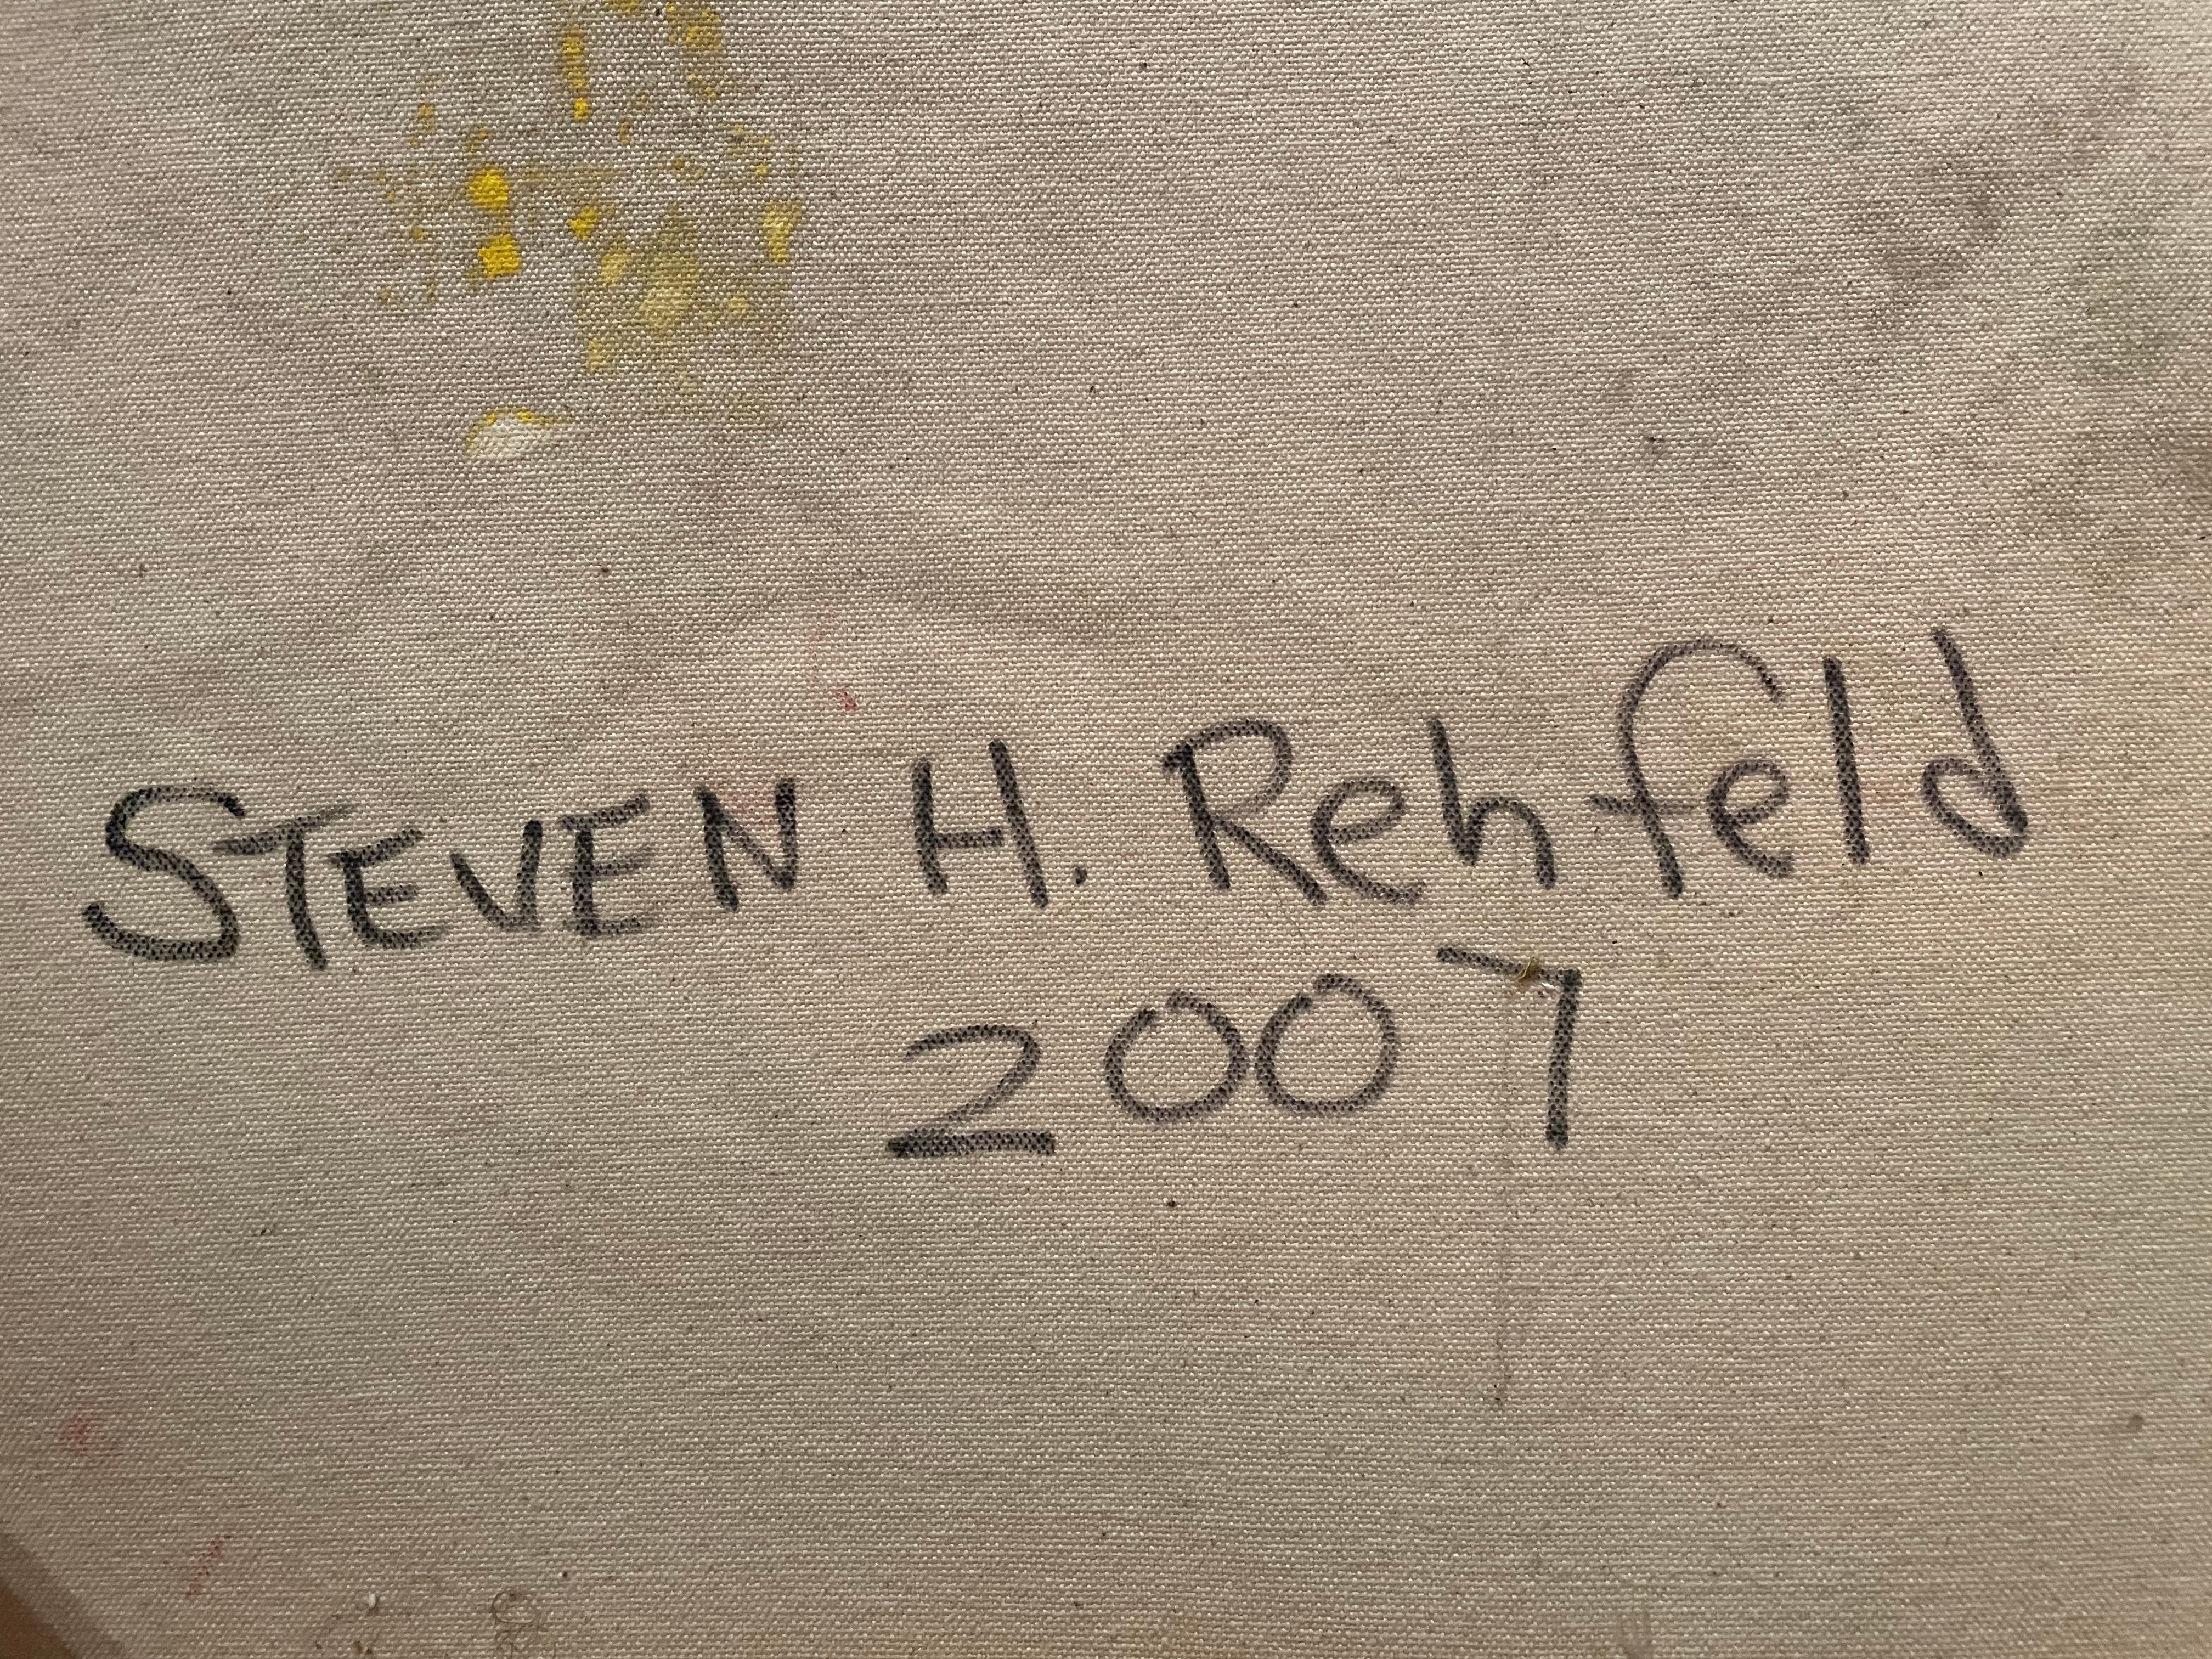 Steven Rehfeld's 24